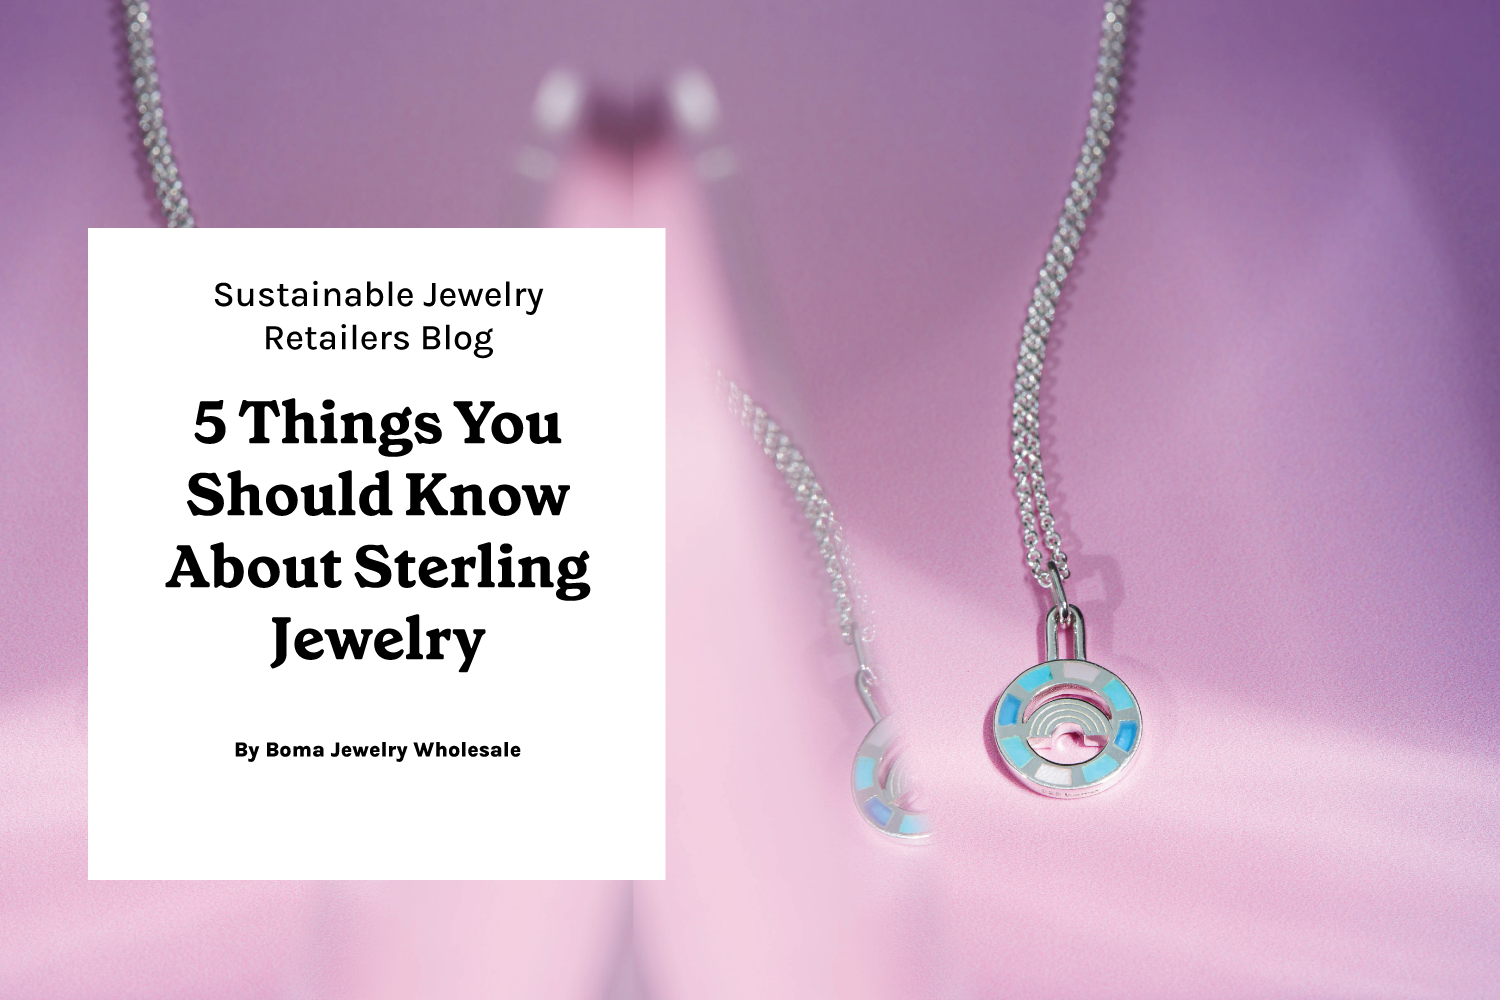 Boma Jewelry Wholesale Blog